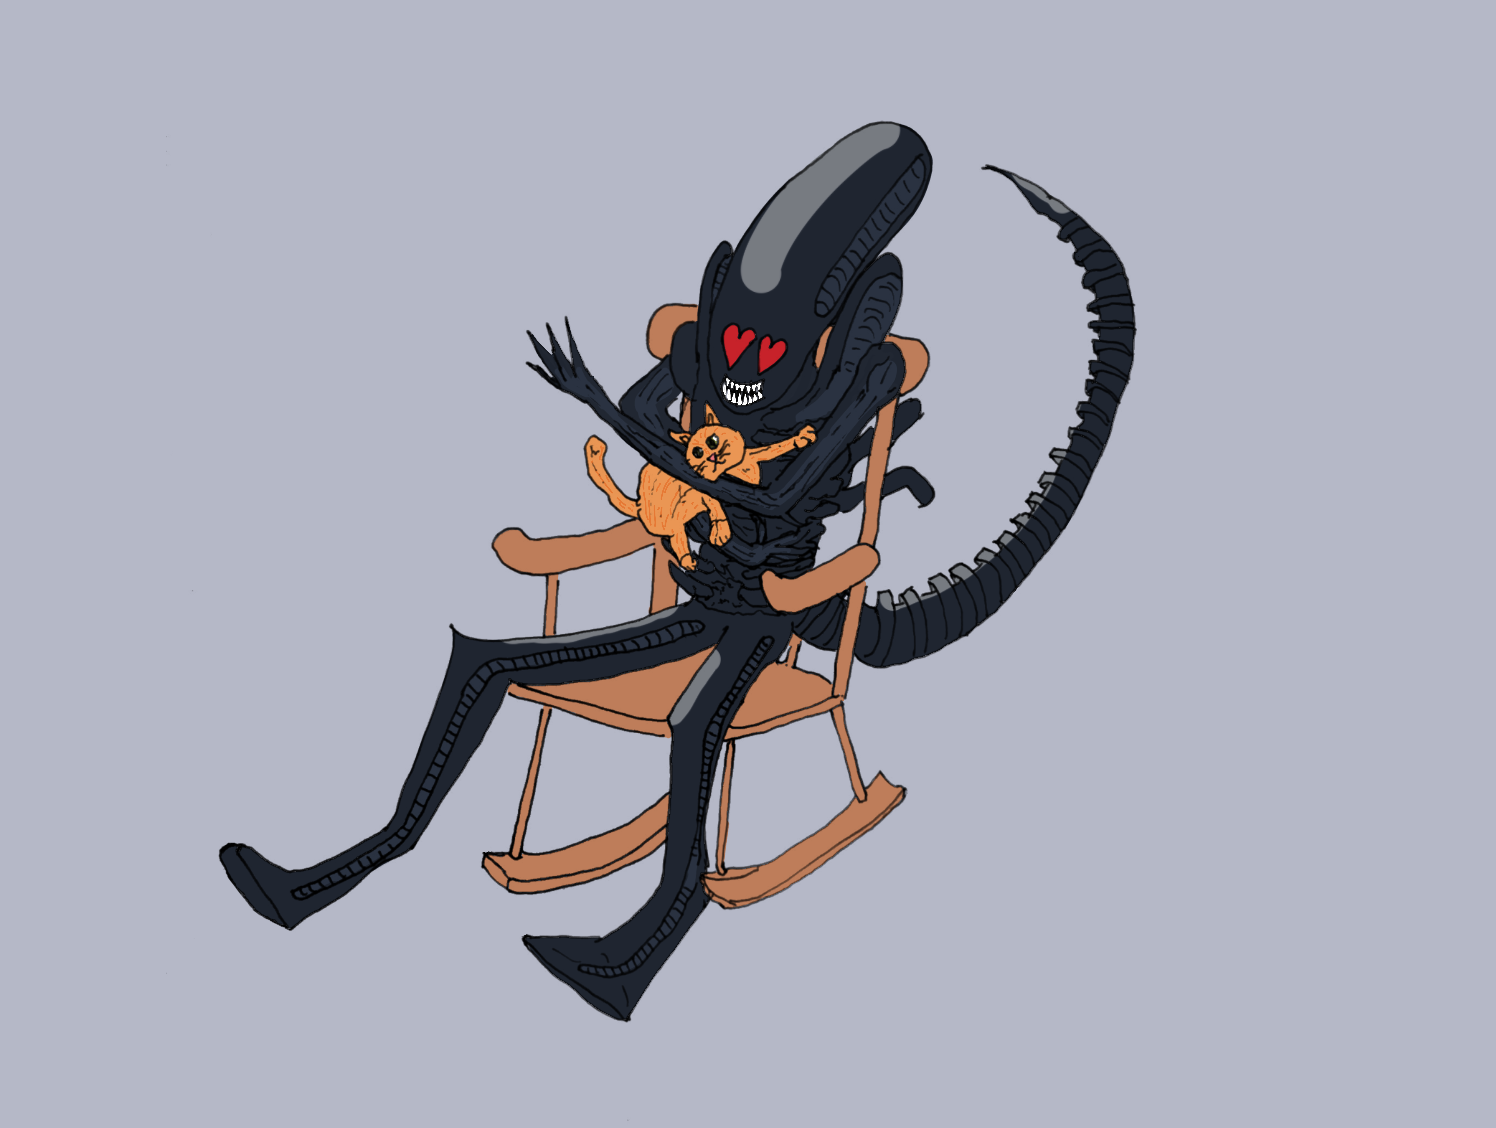 Xenomorph from Alien sits in a rocking chair, cuddling an orange cat